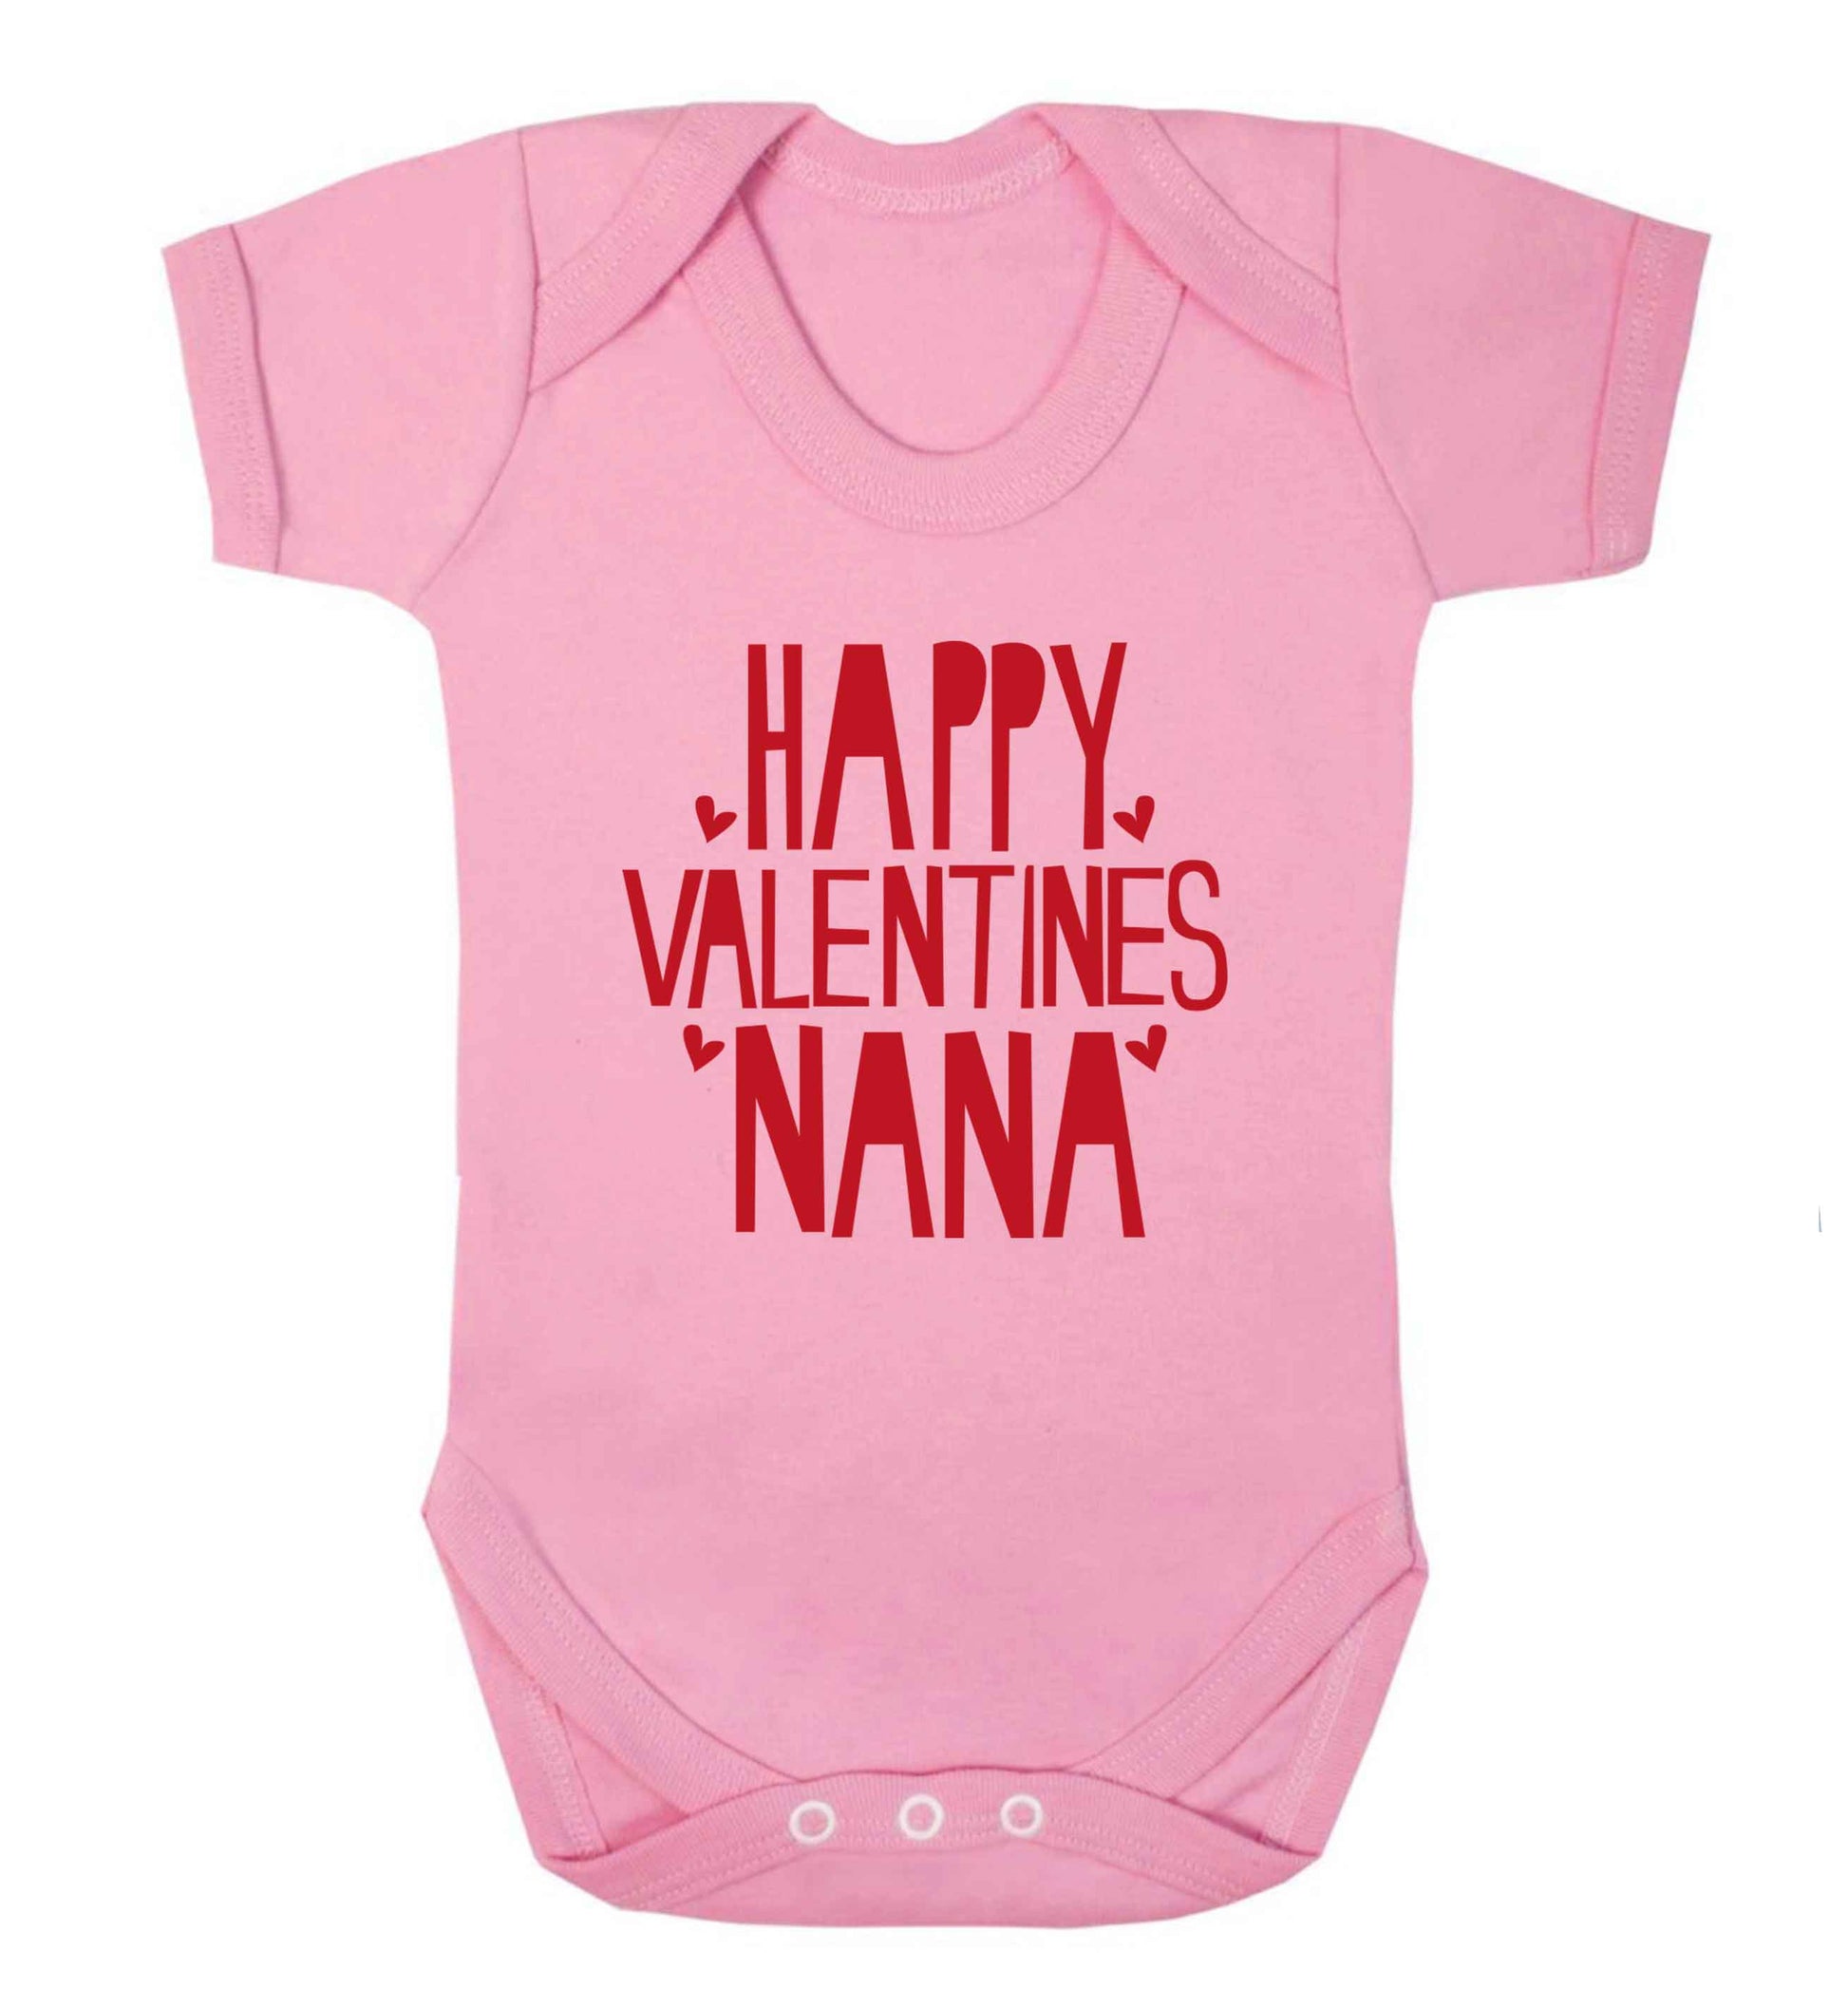 Happy valentines nana baby vest pale pink 18-24 months